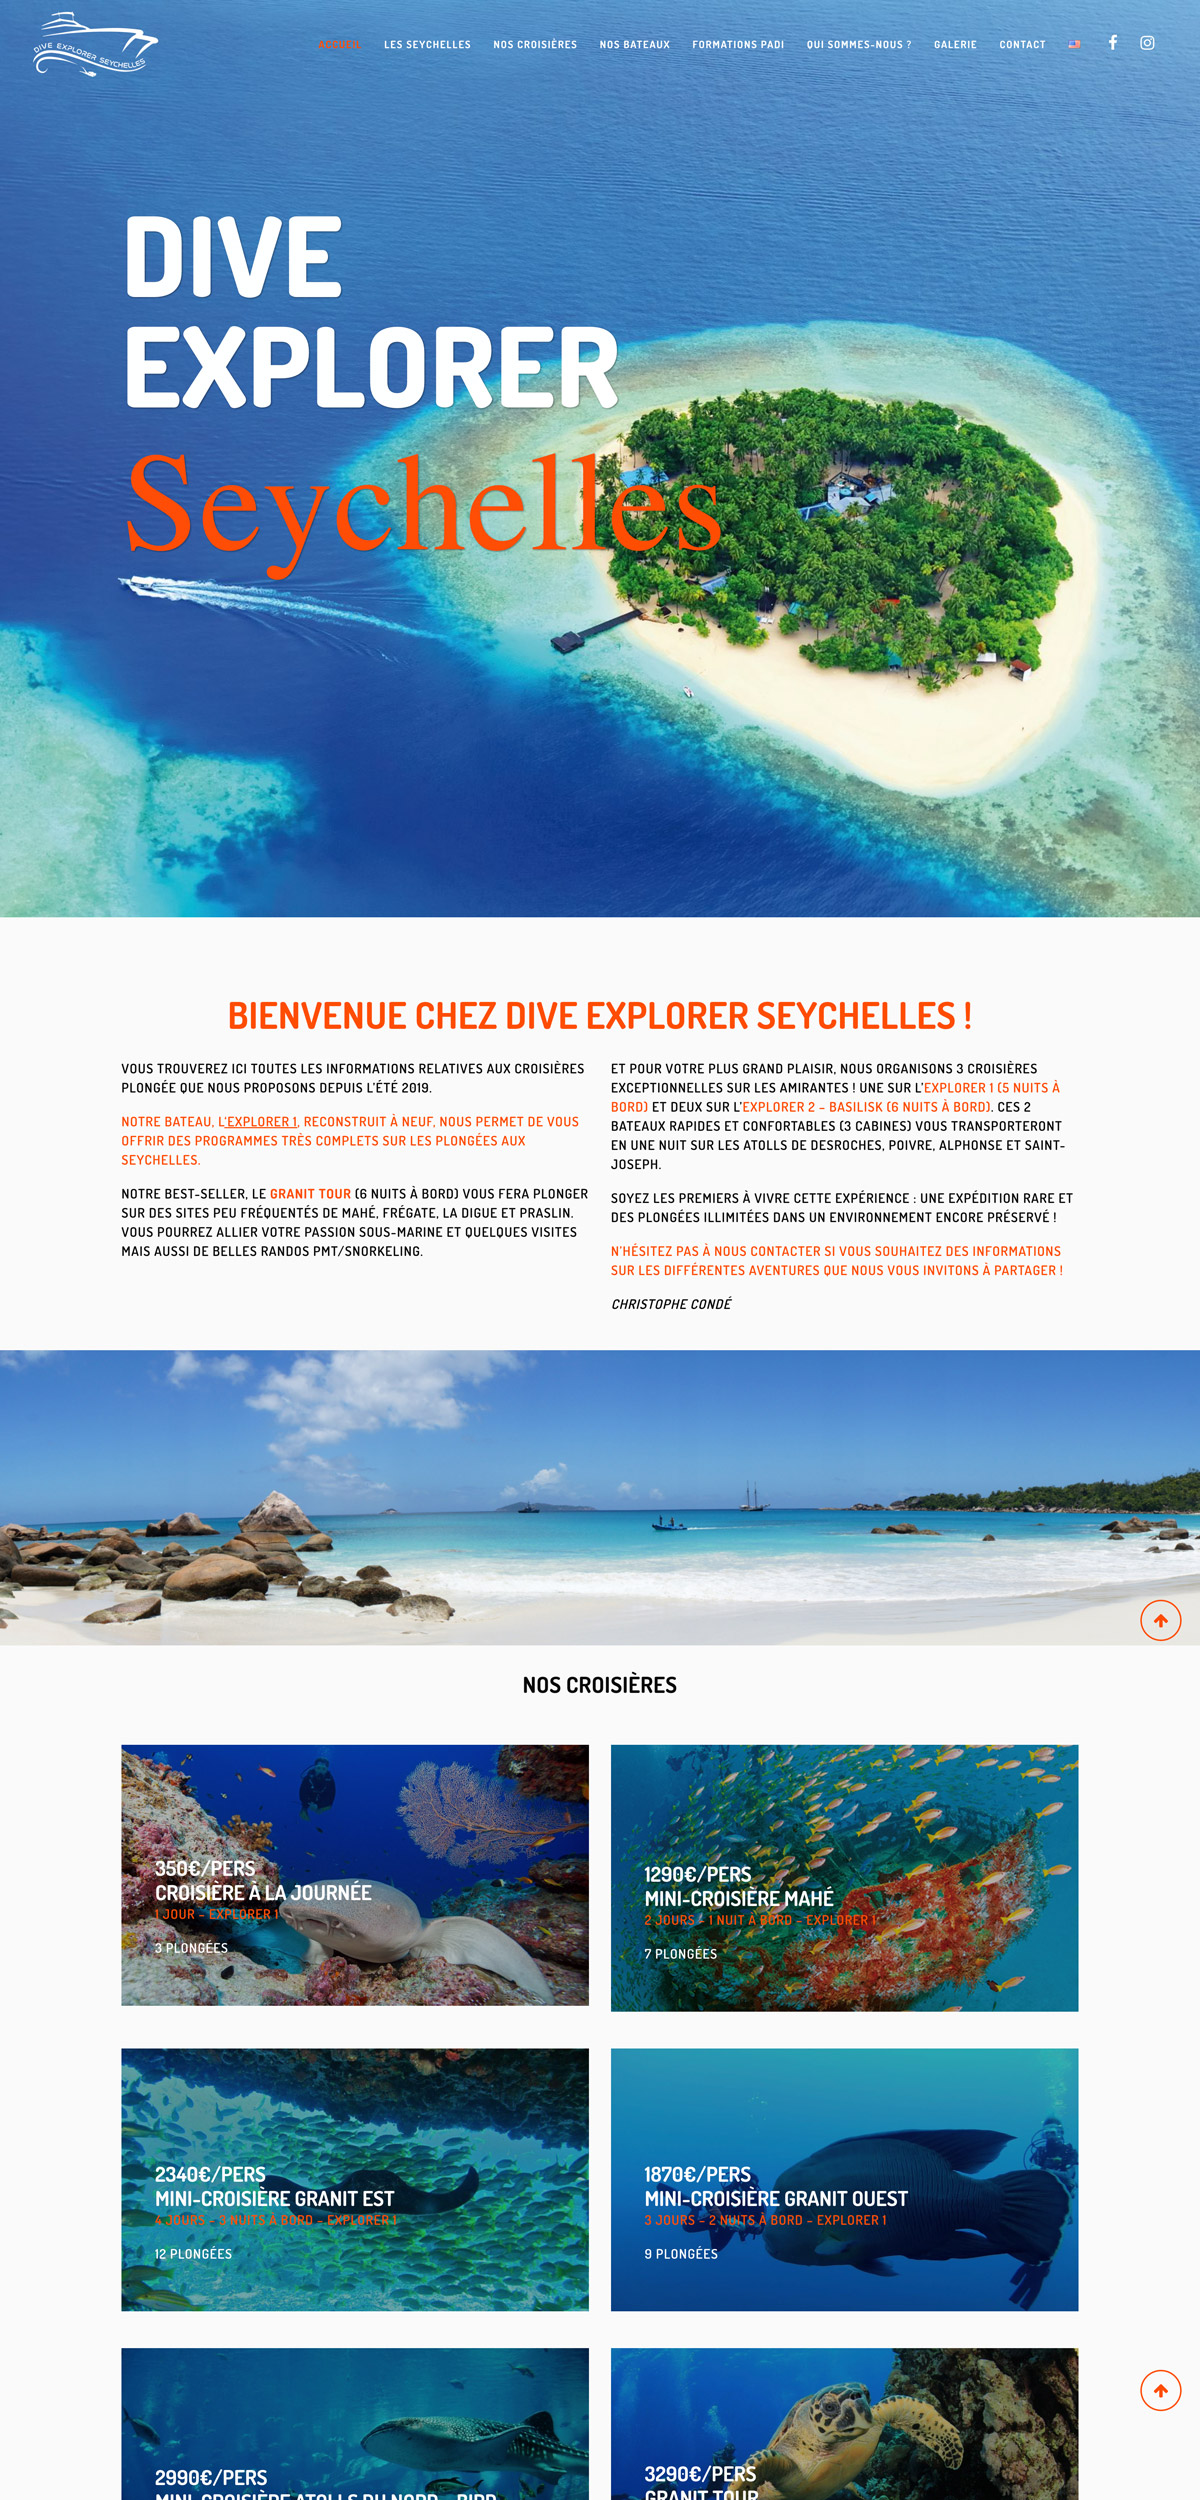 rdsc dive explorer seychelles website screenshot